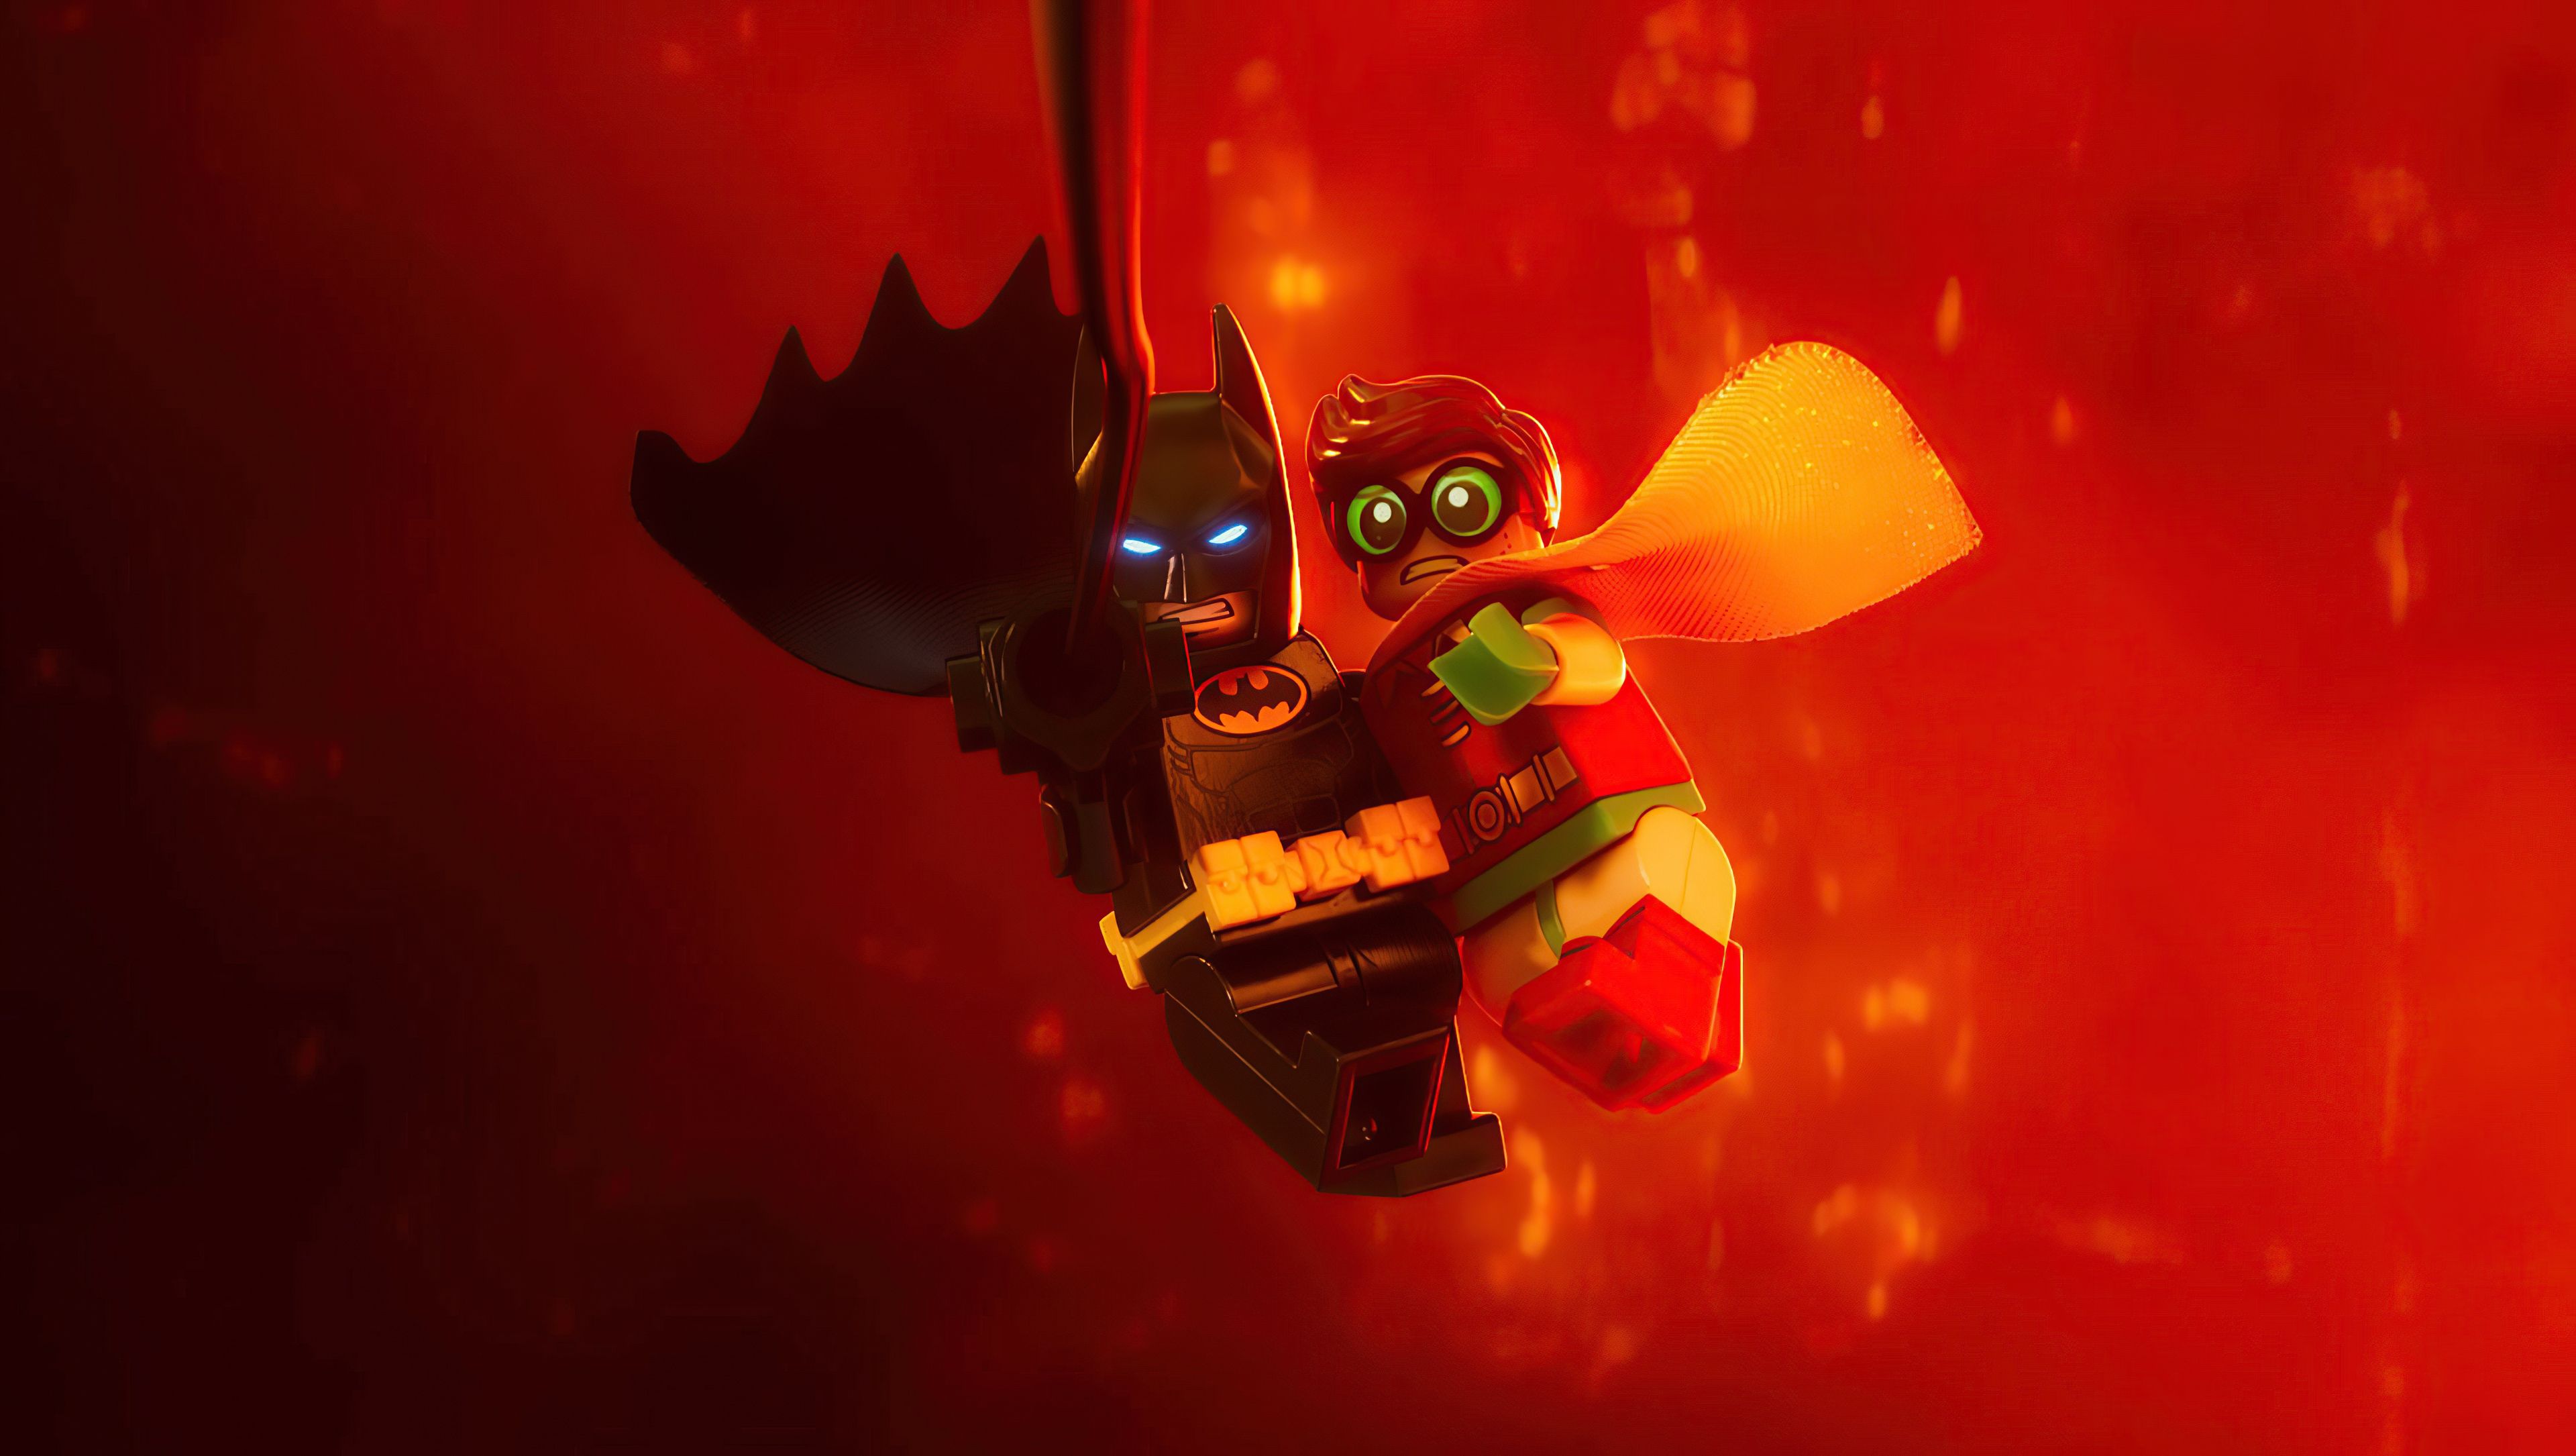 Batman and Robin Lego style Wallpaper 4k Ultra HD